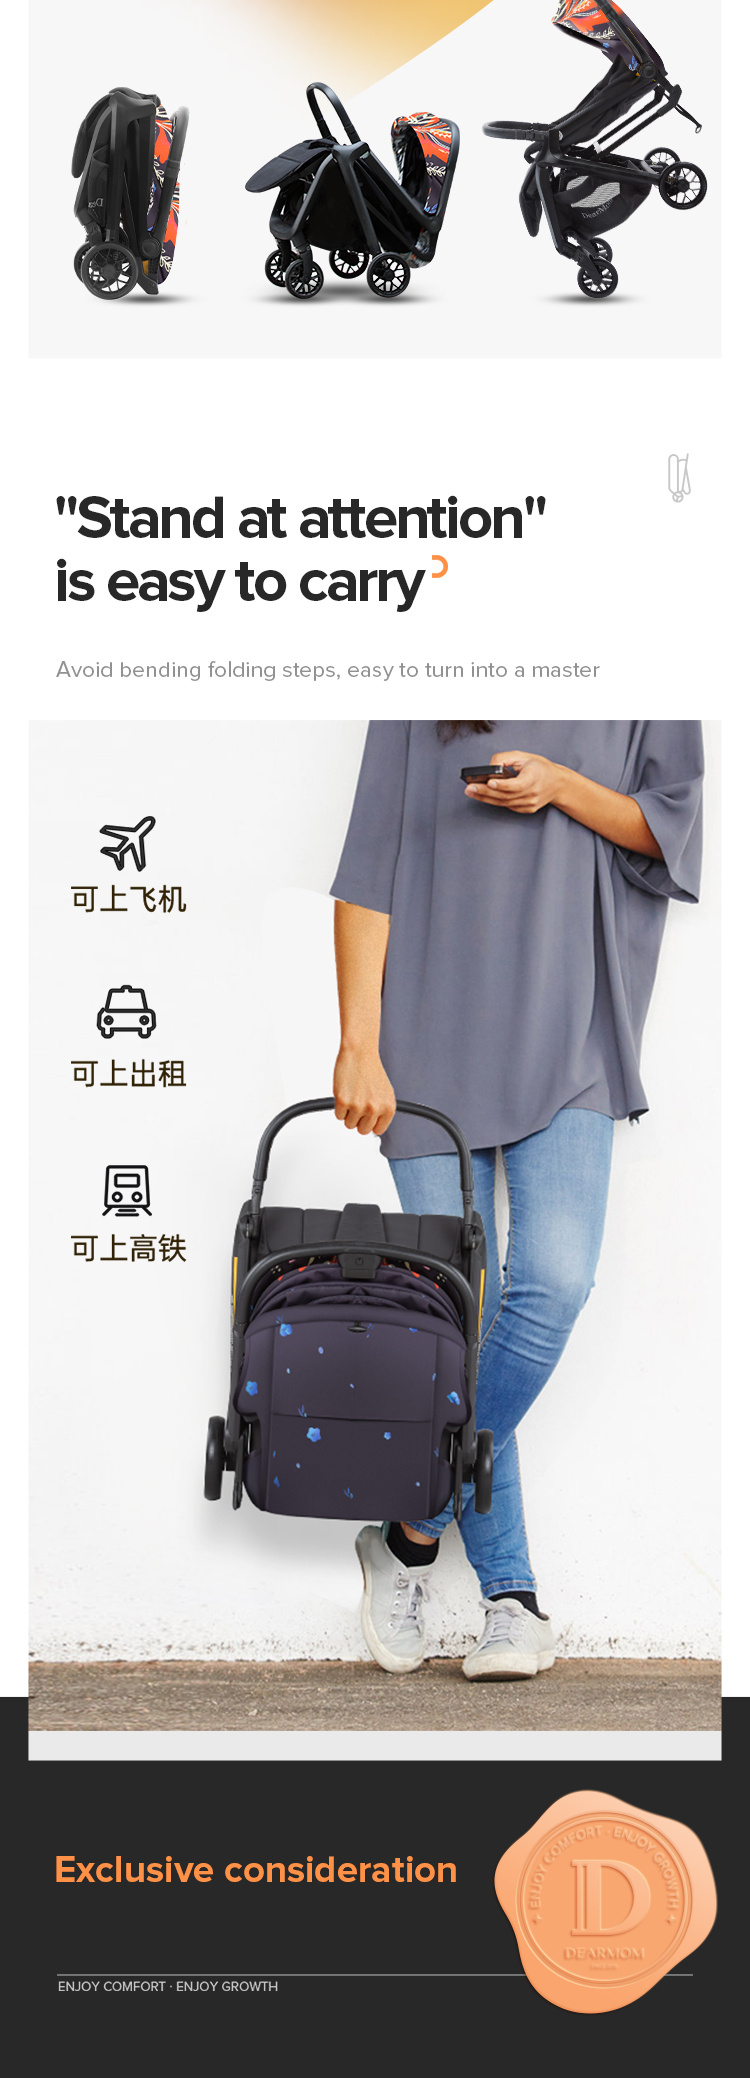 DearMom A8 portable one-second folding stroller